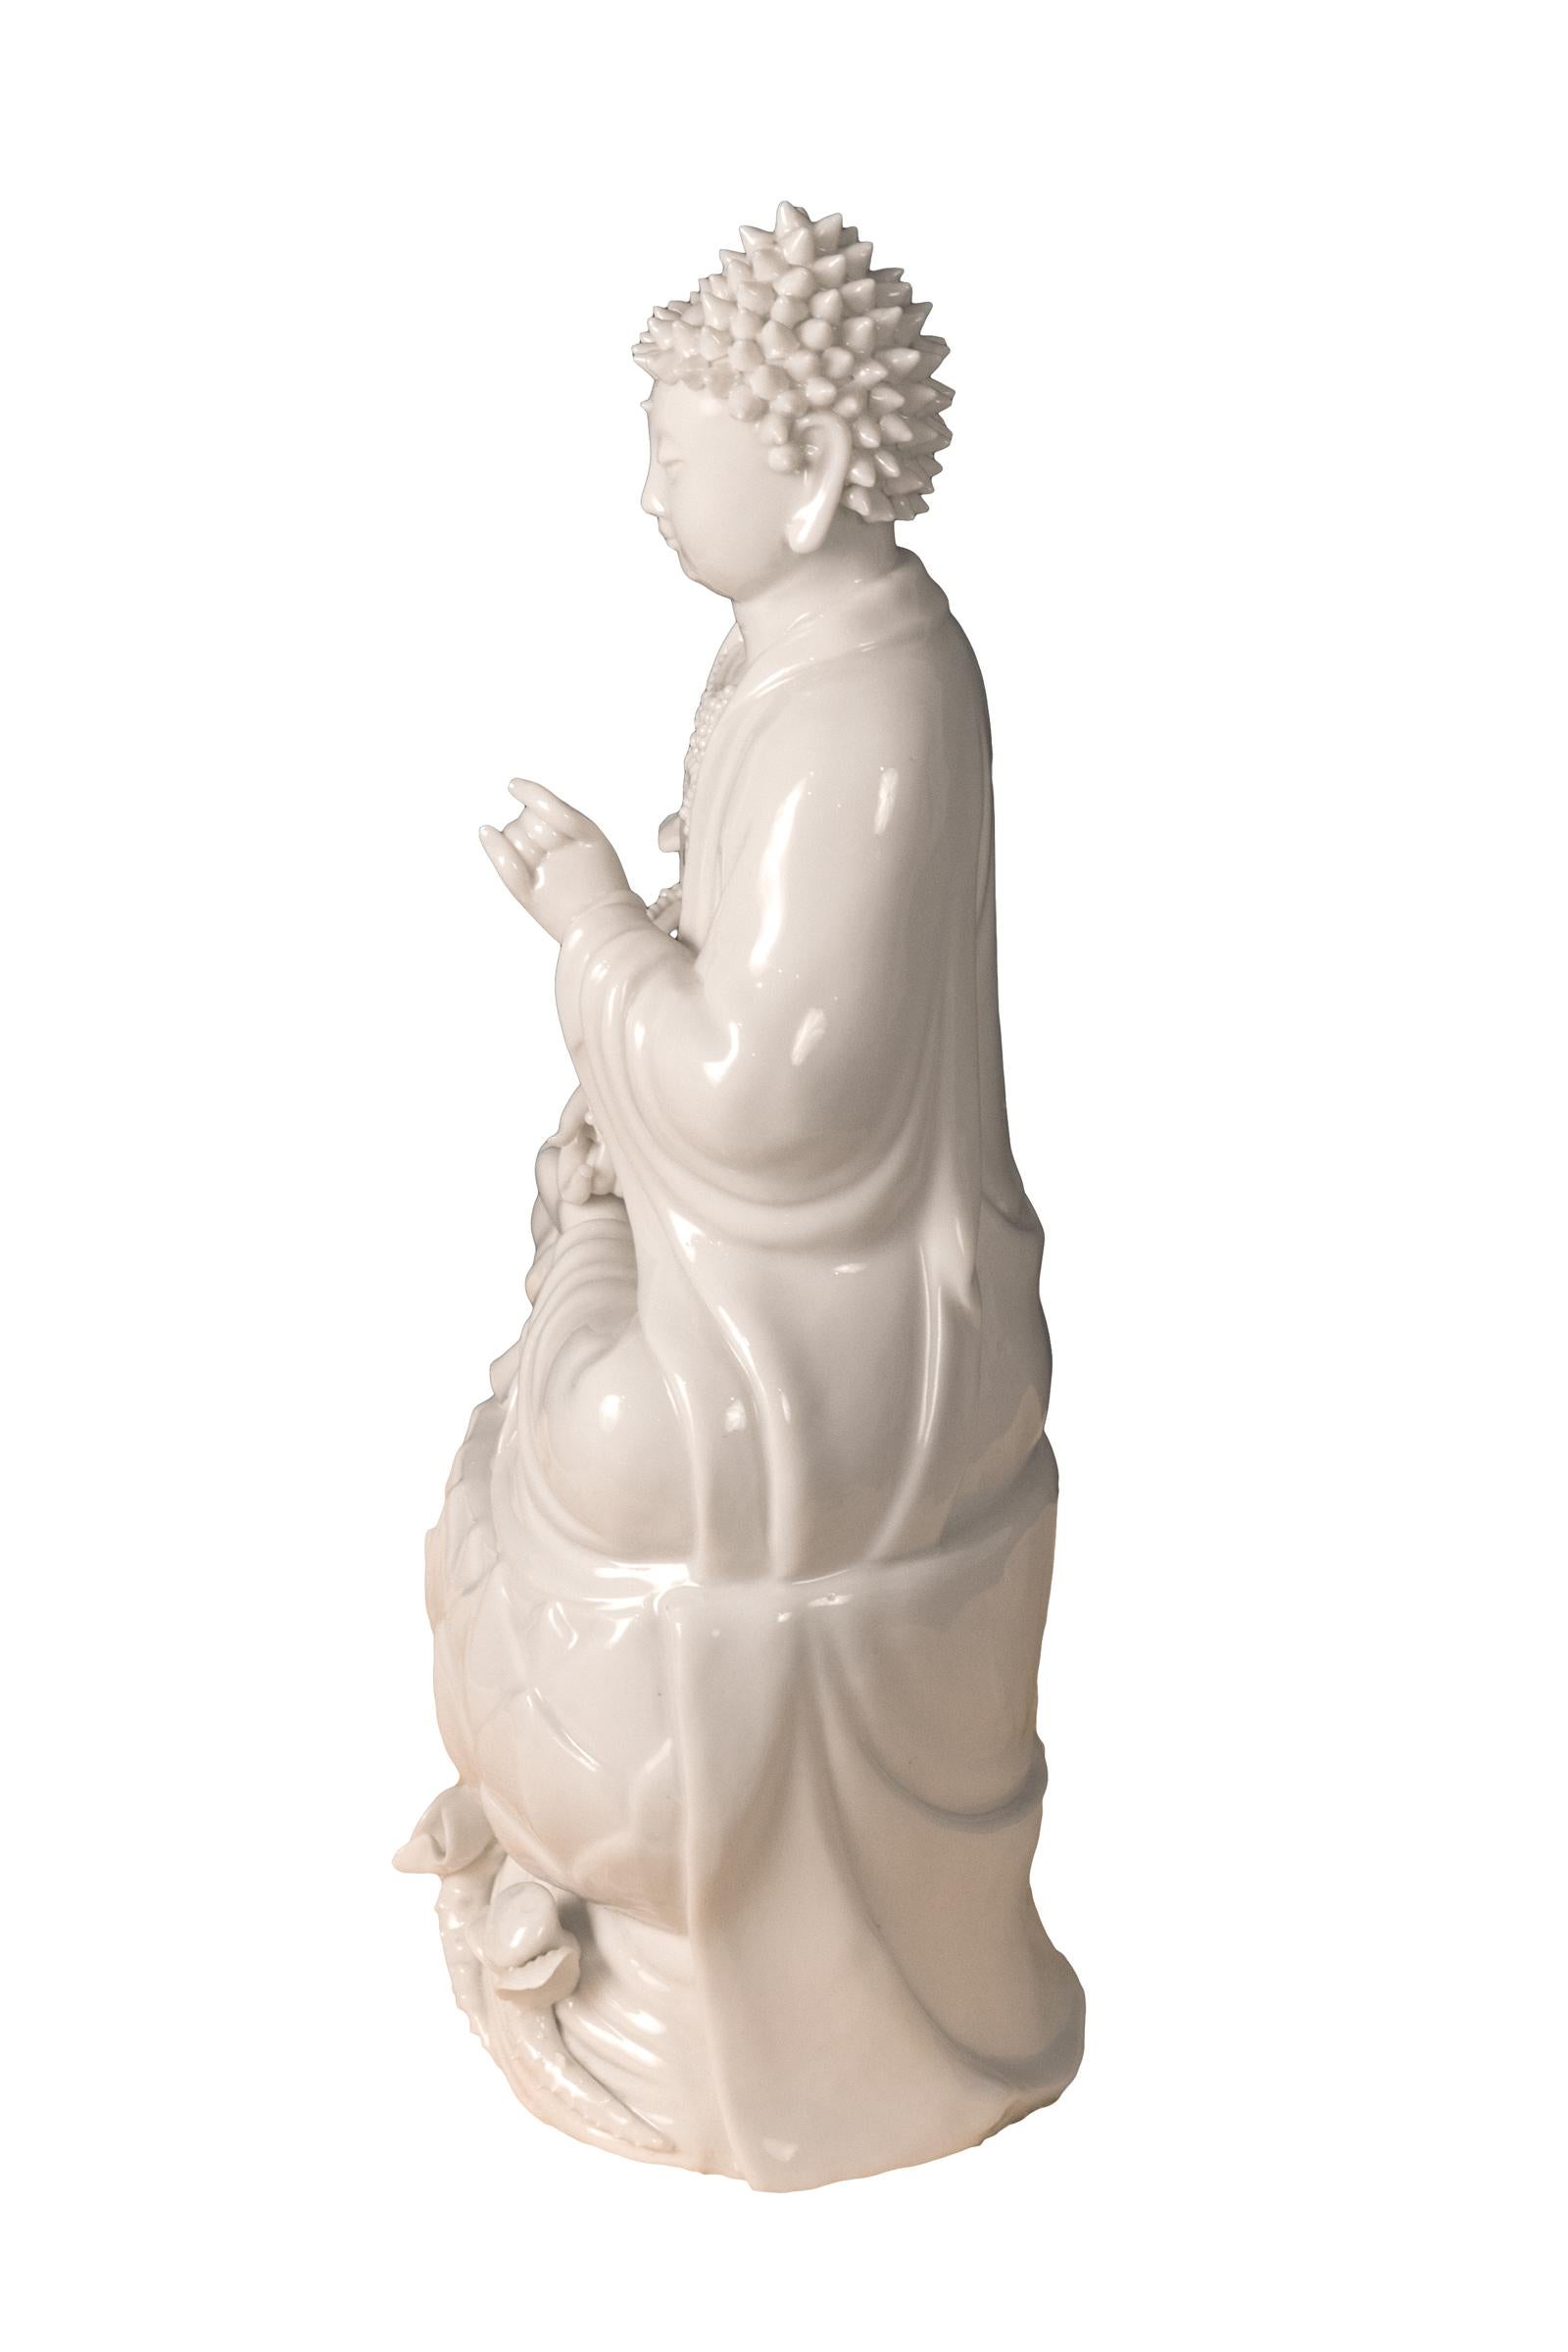 20th Century Blanc de Chine 'Dehua' Porcelain Figure of Quanyin